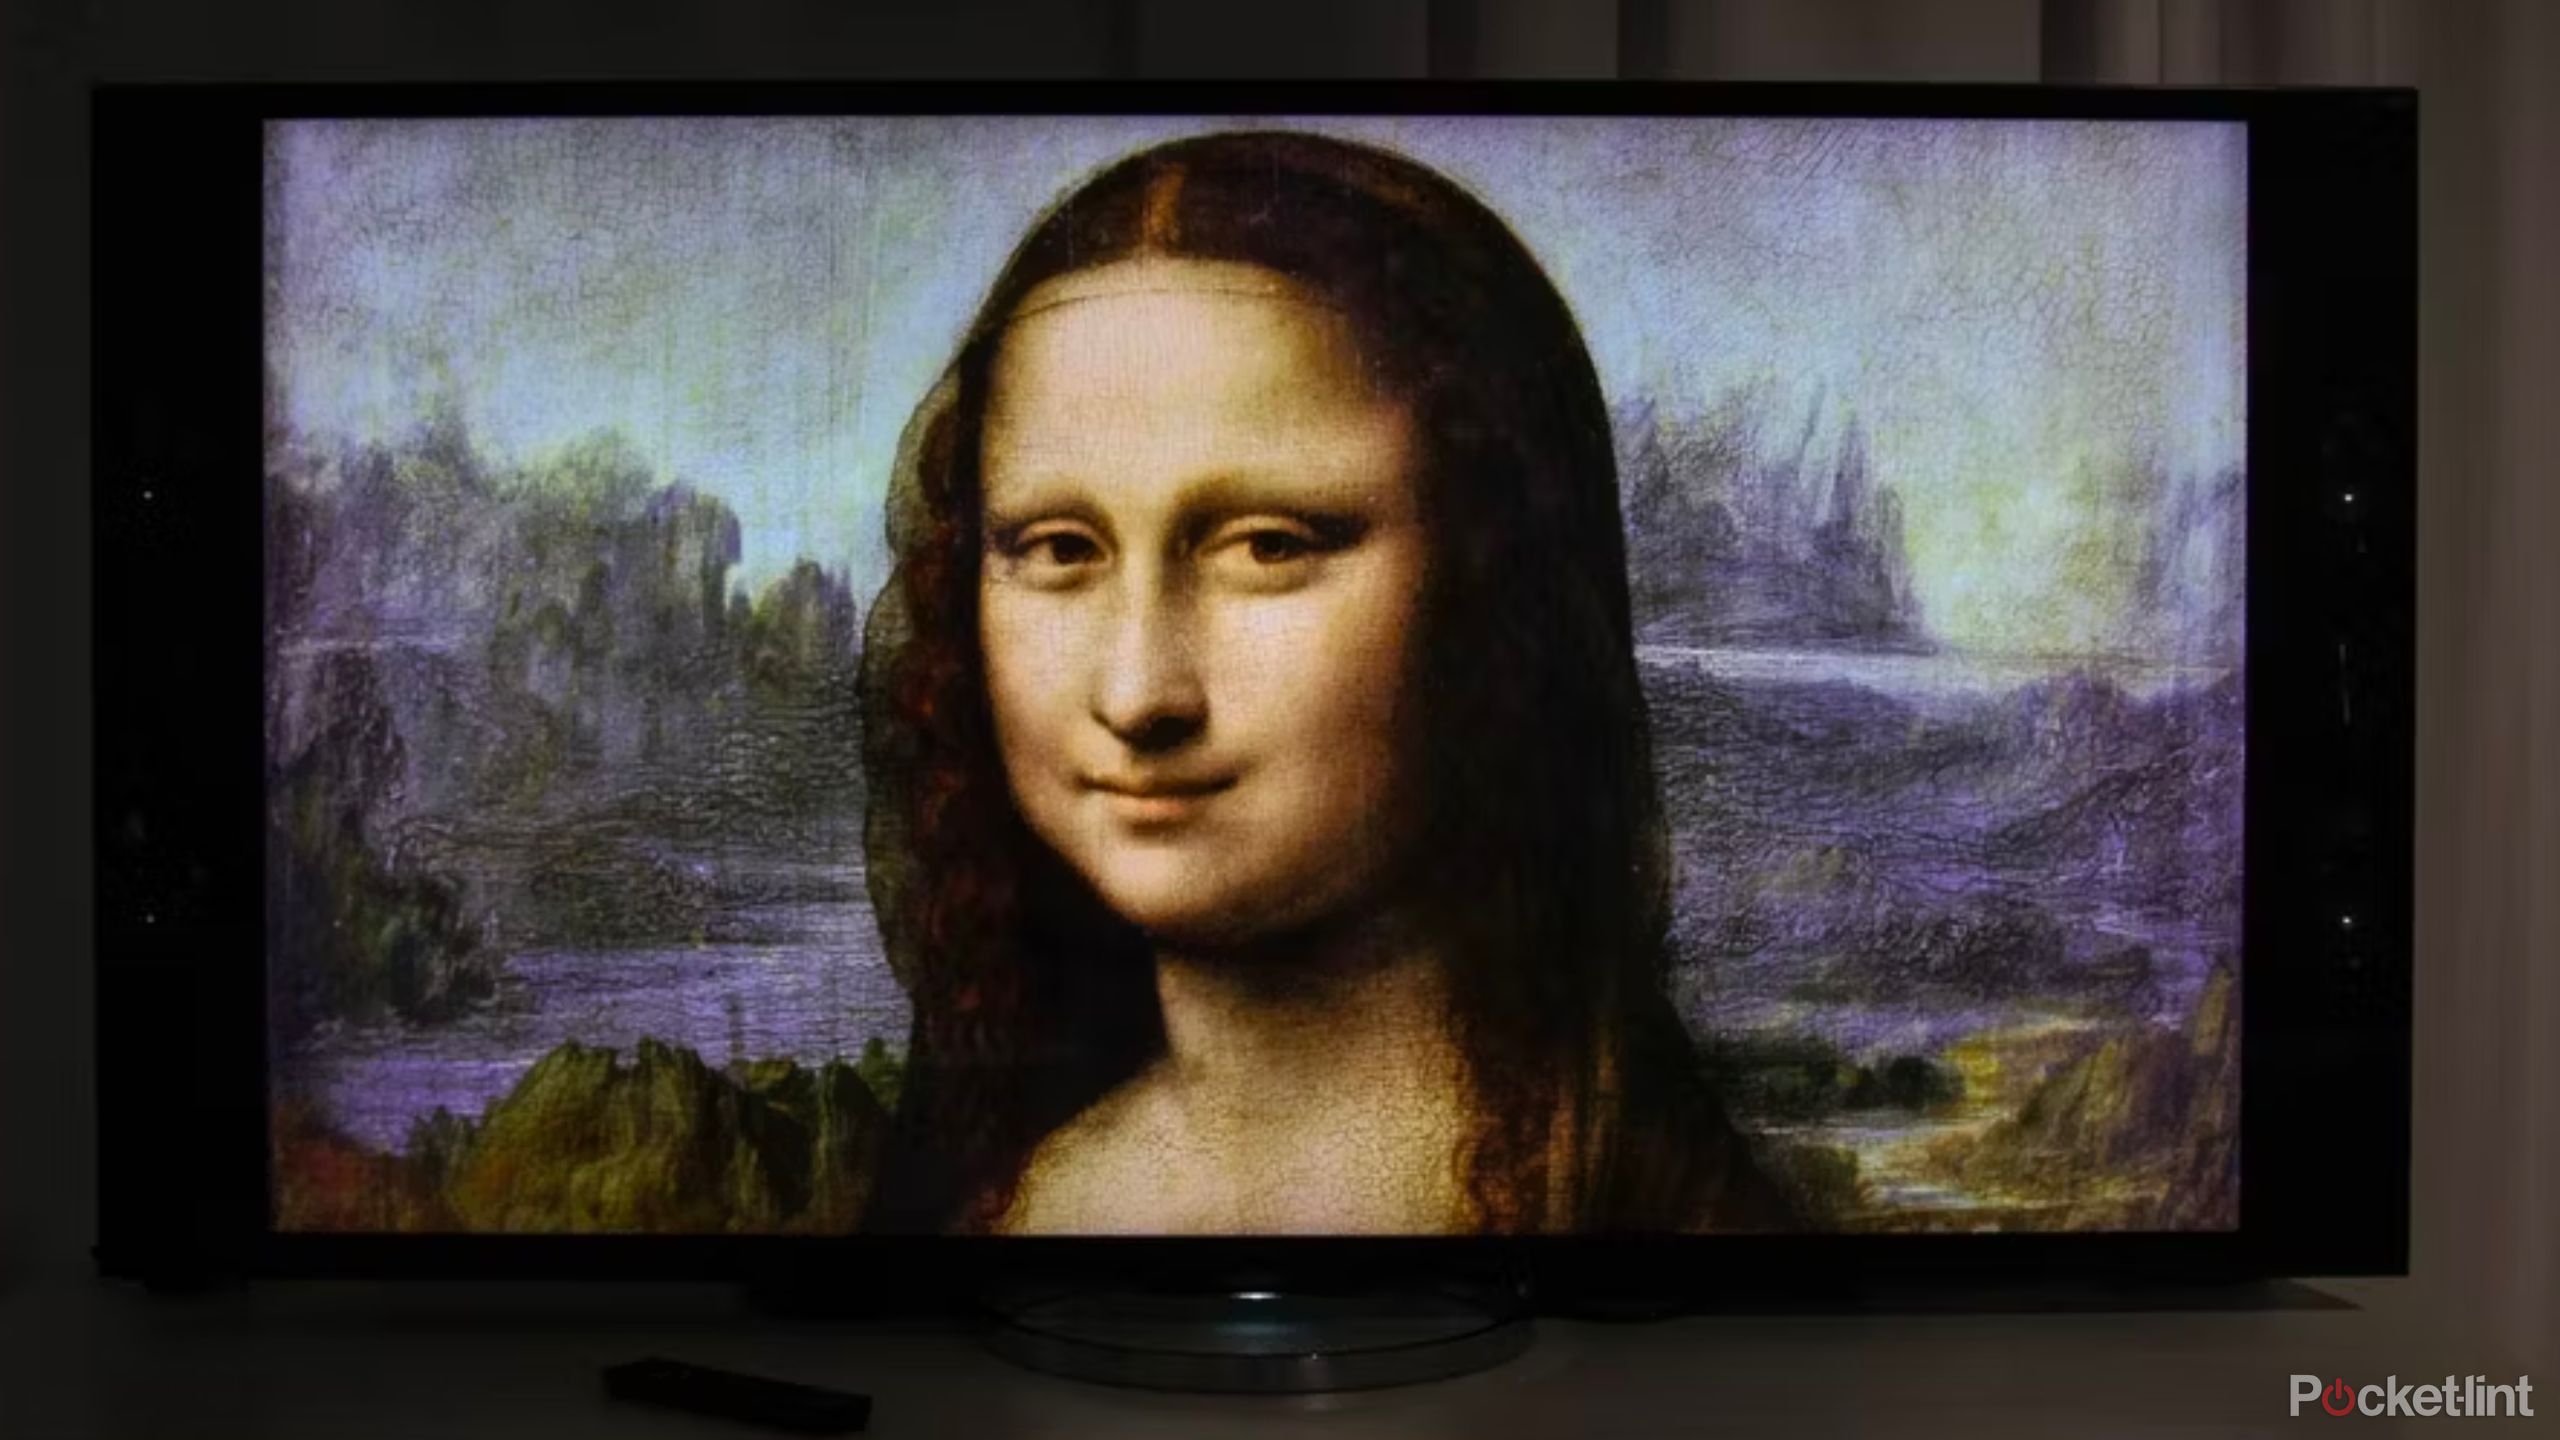 Sony bravia x9 tv featuring the Mona Lisa. 